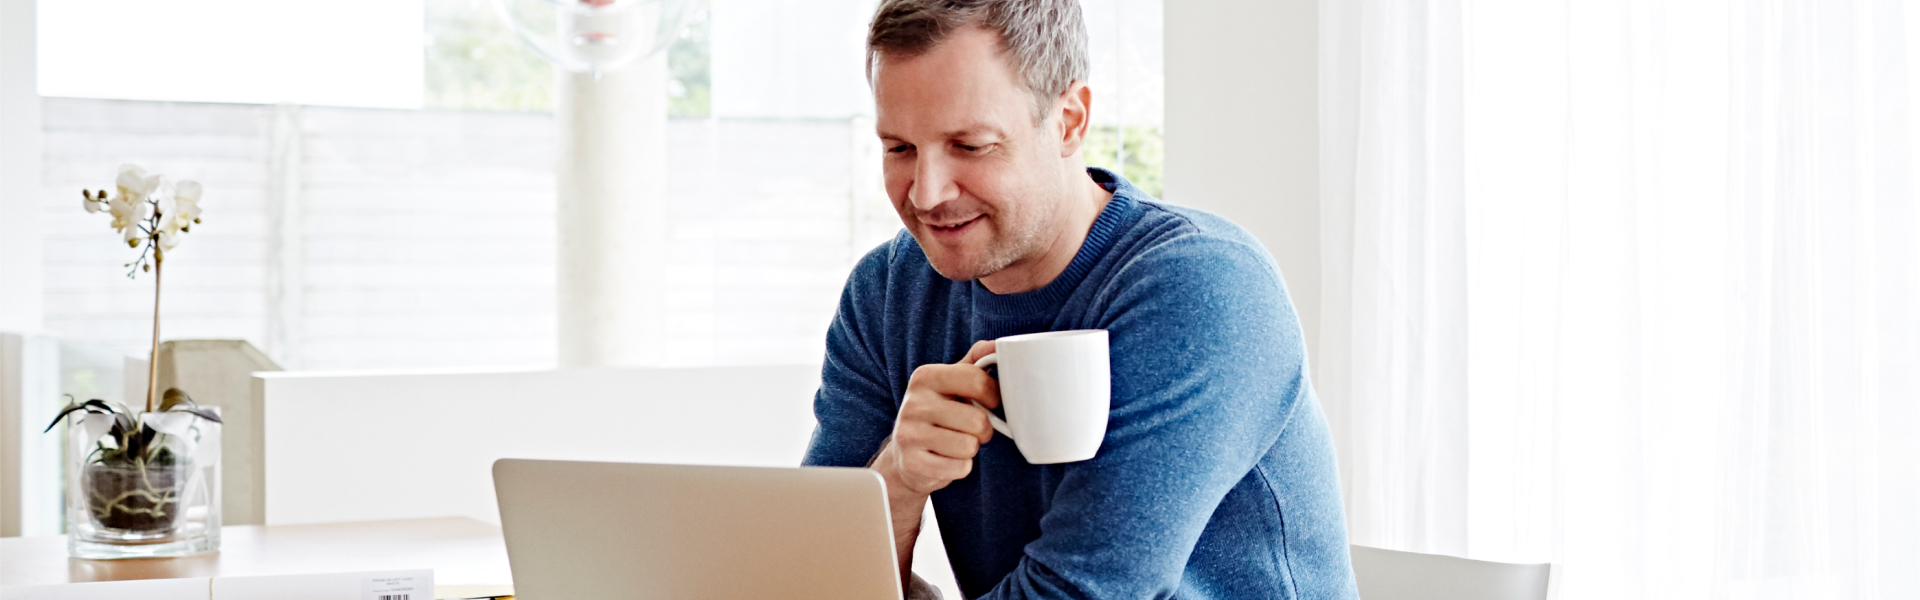 Man in blue sweater drinks coffee in home office.	